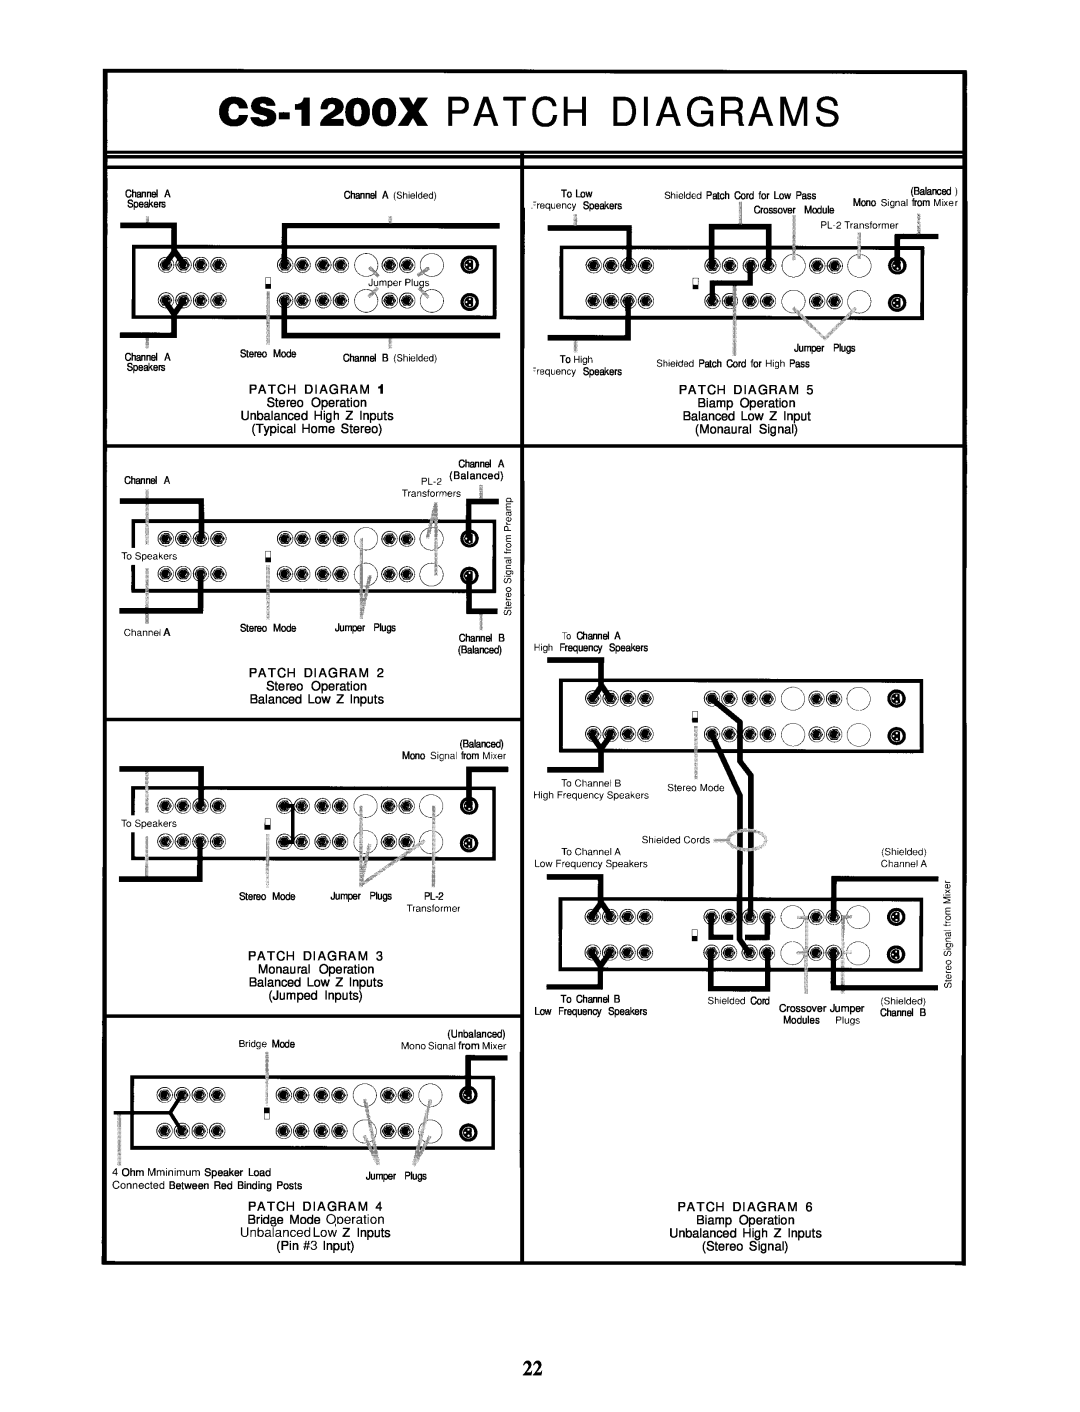 Peavey CS 1200X manual CS42OOX PATCH DIAGRAMS, Patch Diagram 